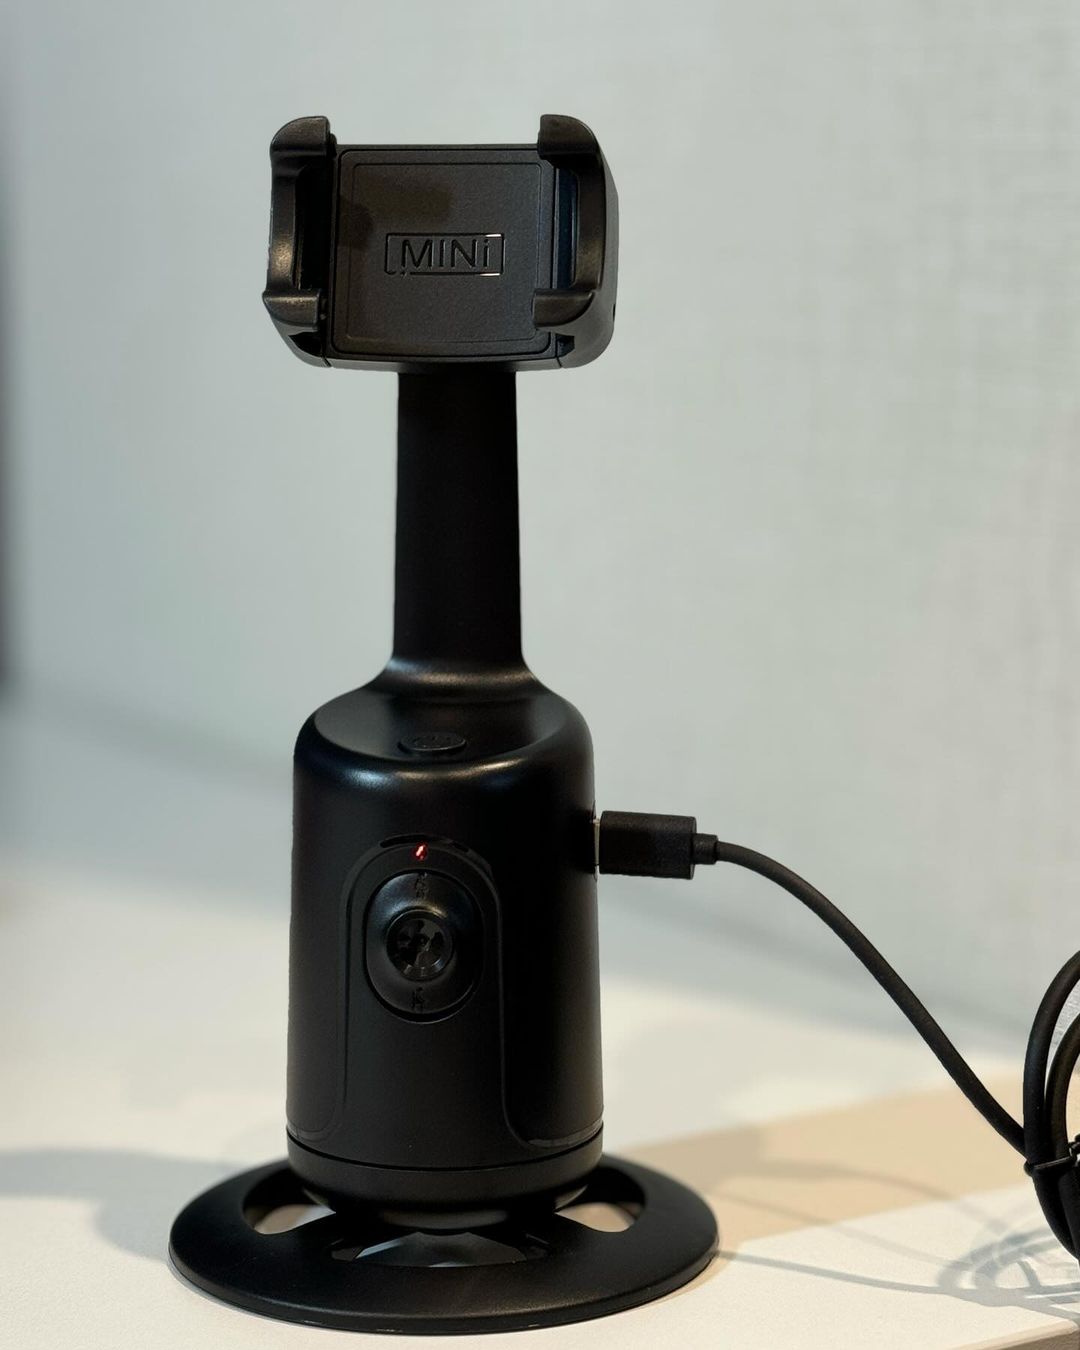 PO1 - 360° AI Auto-Tracking Phone Mount